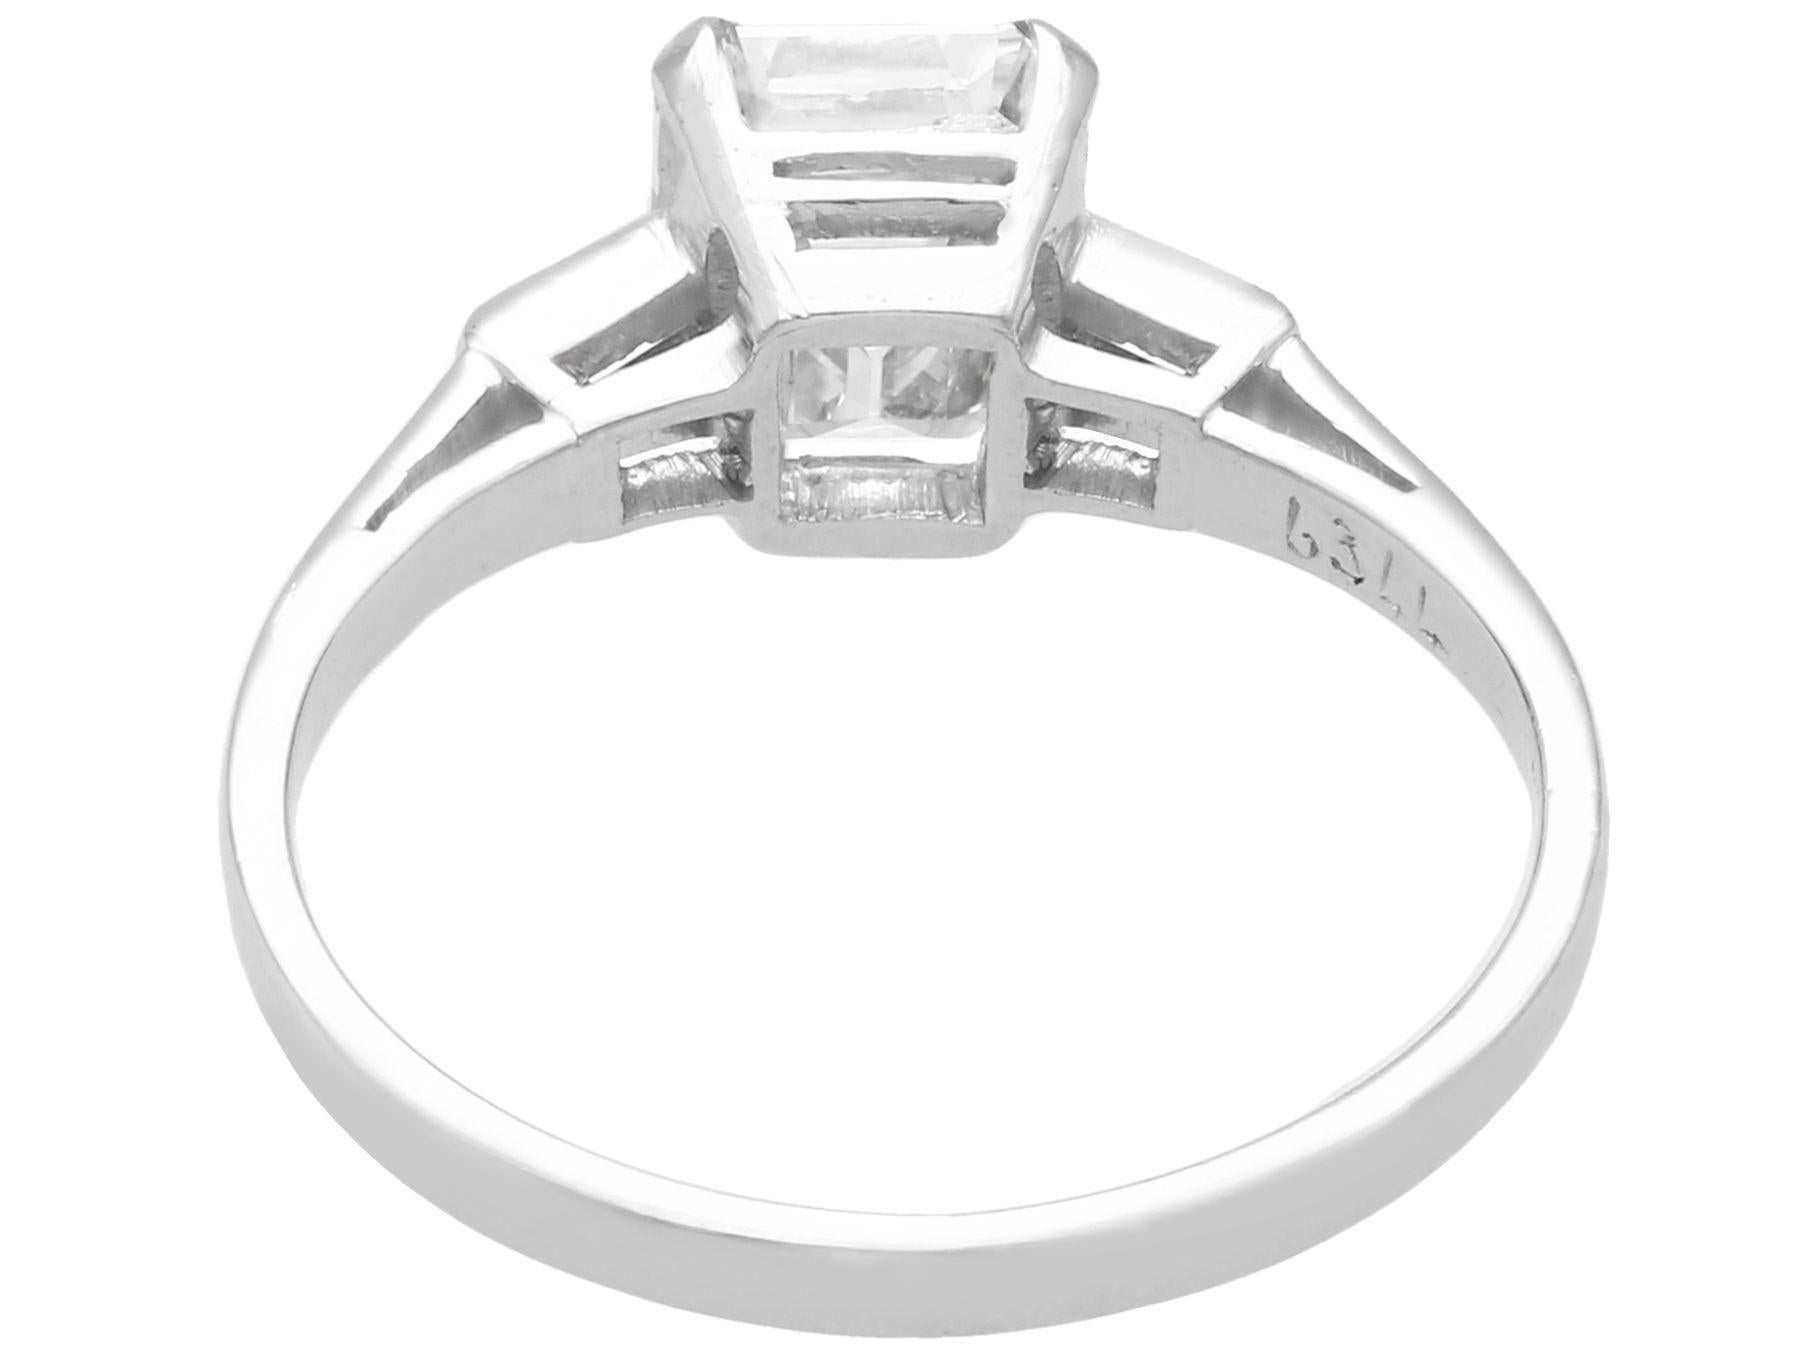 Women's 1930s Antique 1.11 Carat Emerald Cut Diamond and Platinum Solitaire Ring For Sale